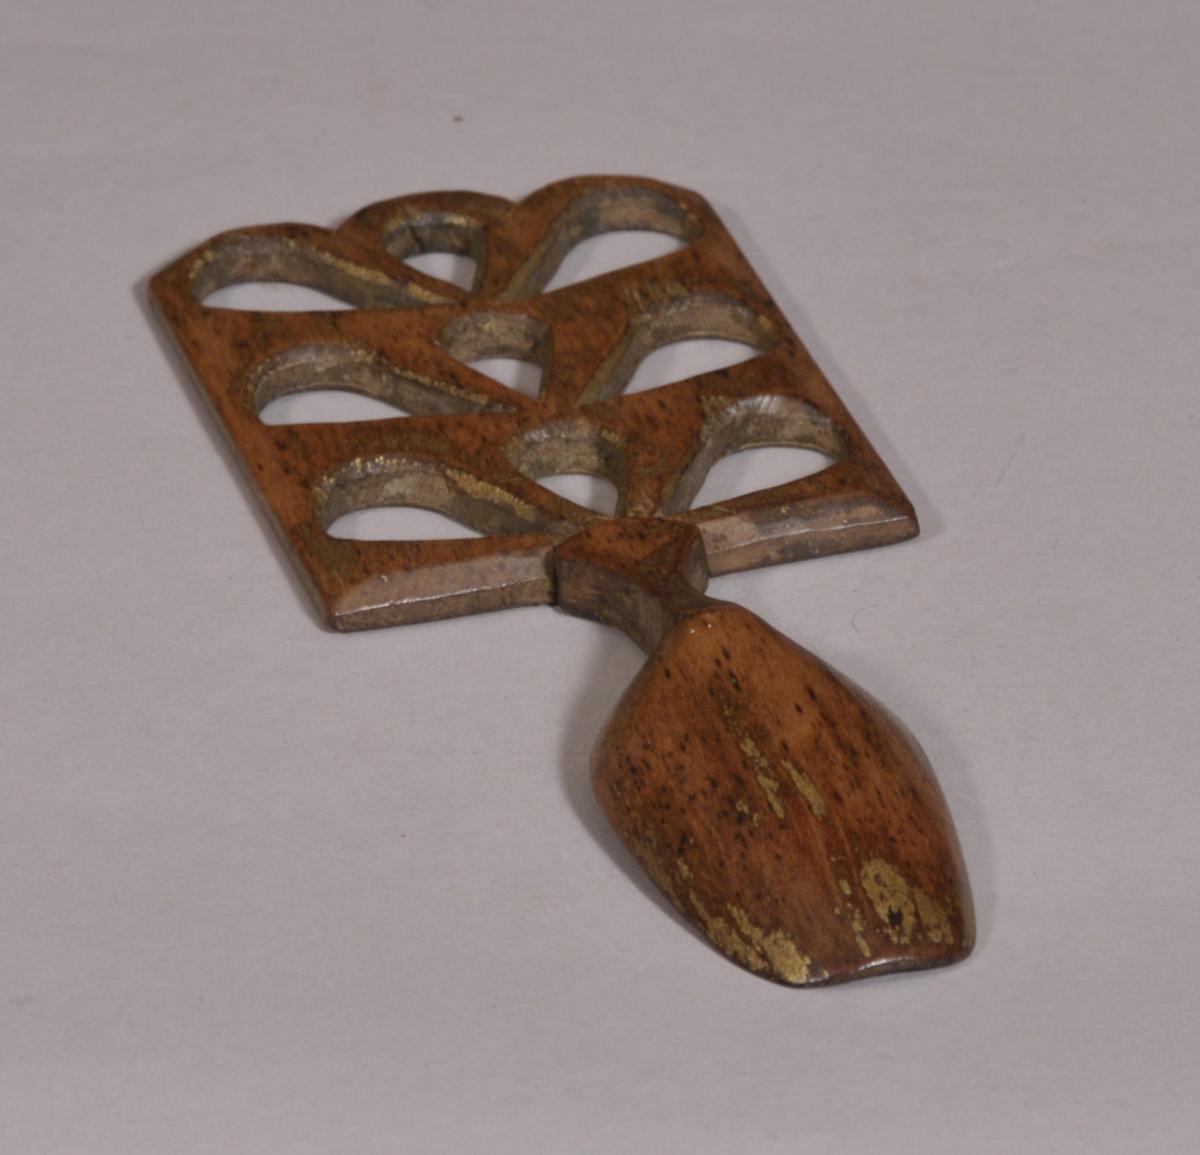 S/3687 Antique Treen 19th Century Flat Handled Love Spoon